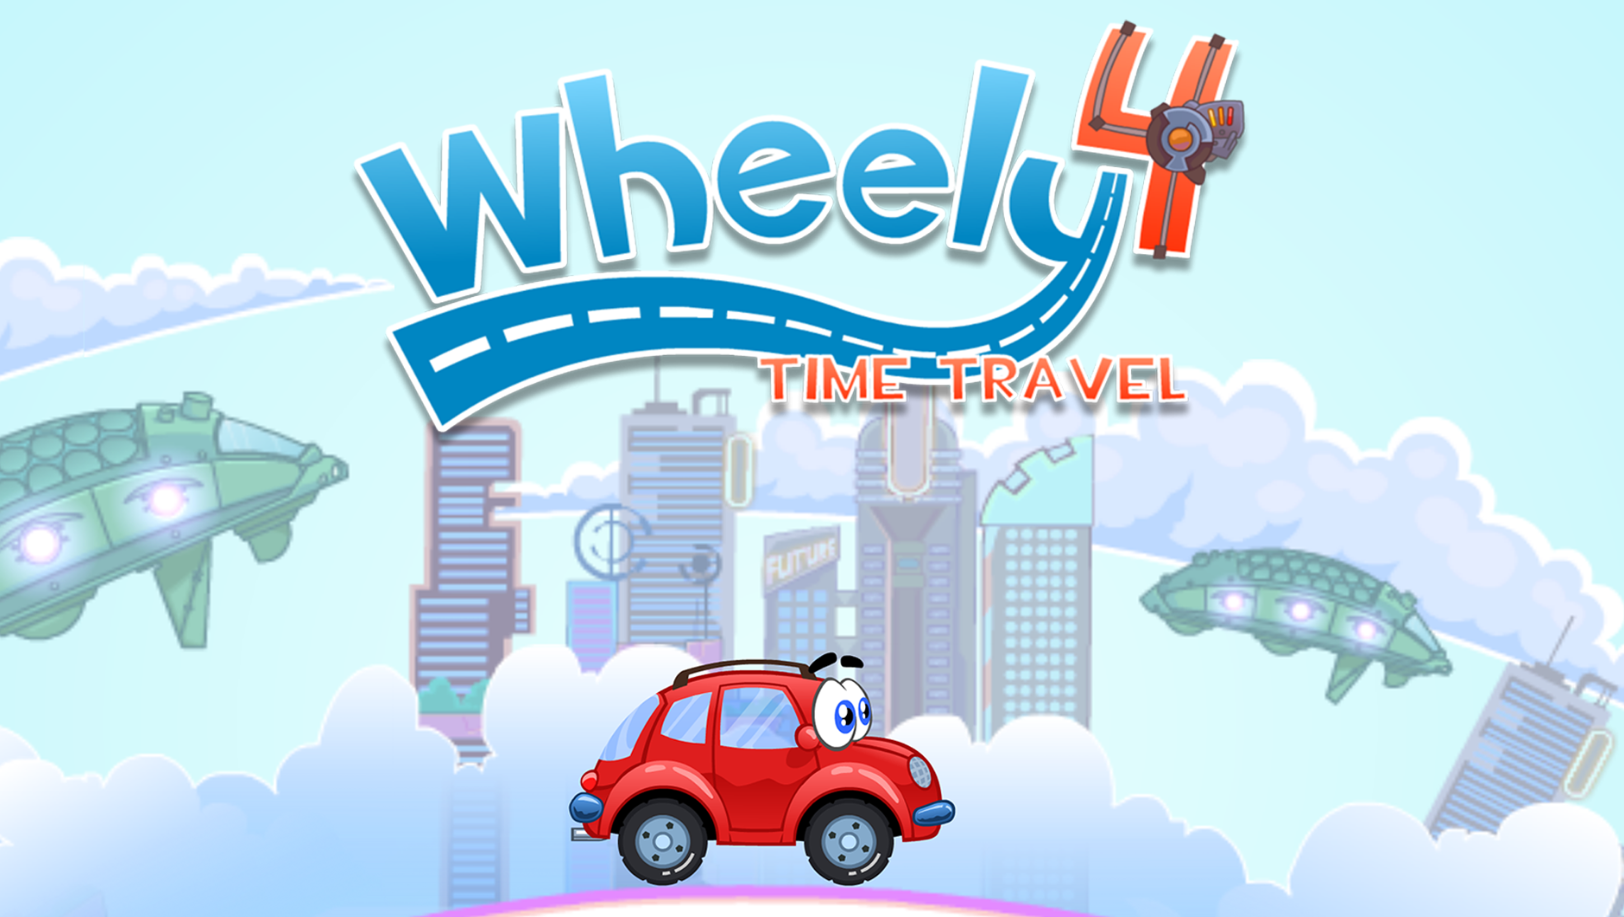 wheely 9 cool math games